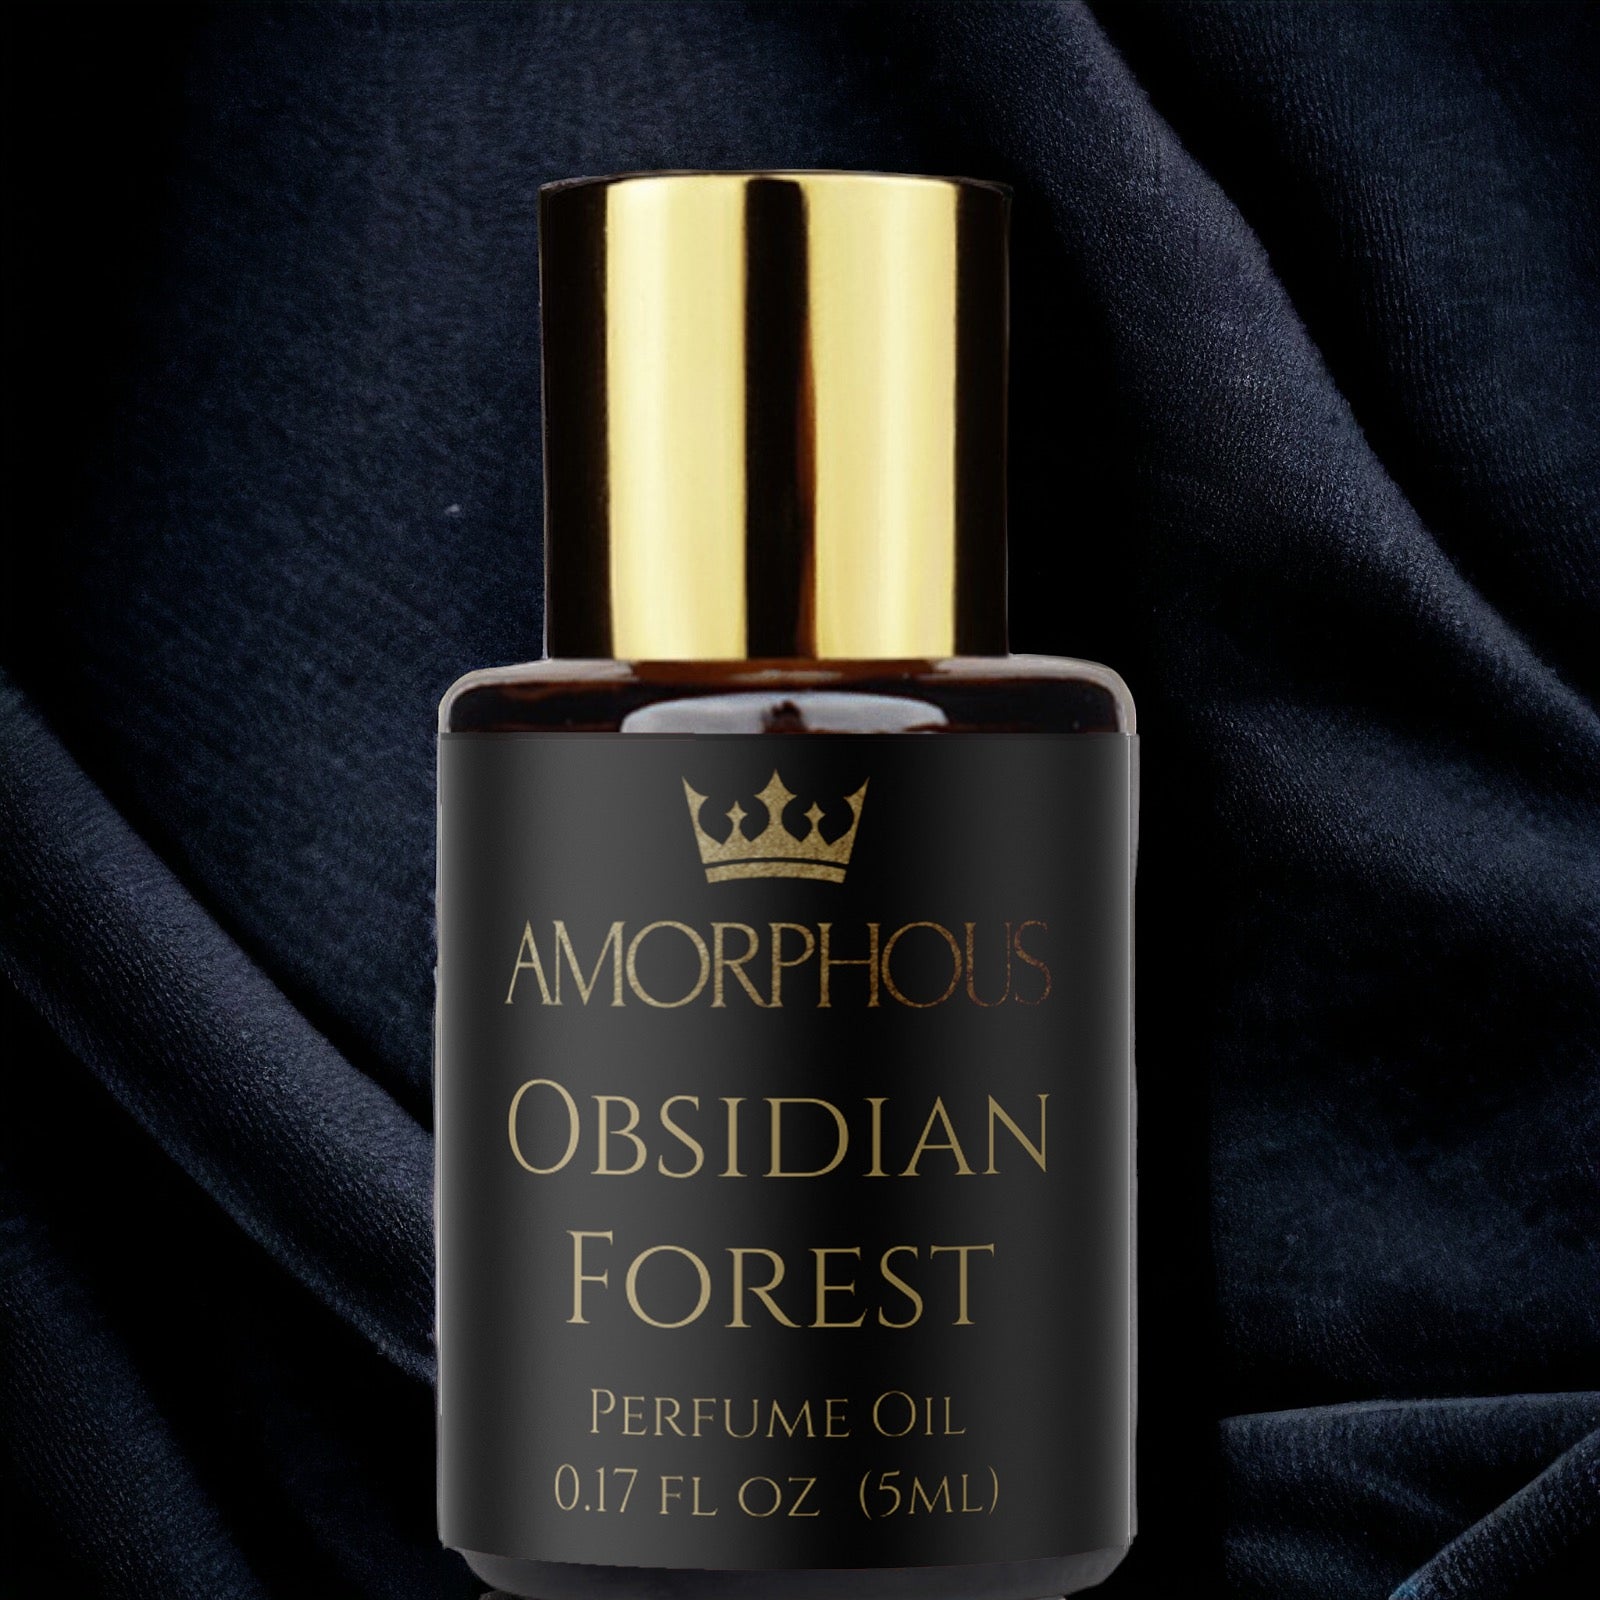 obsidian forest perfume oil